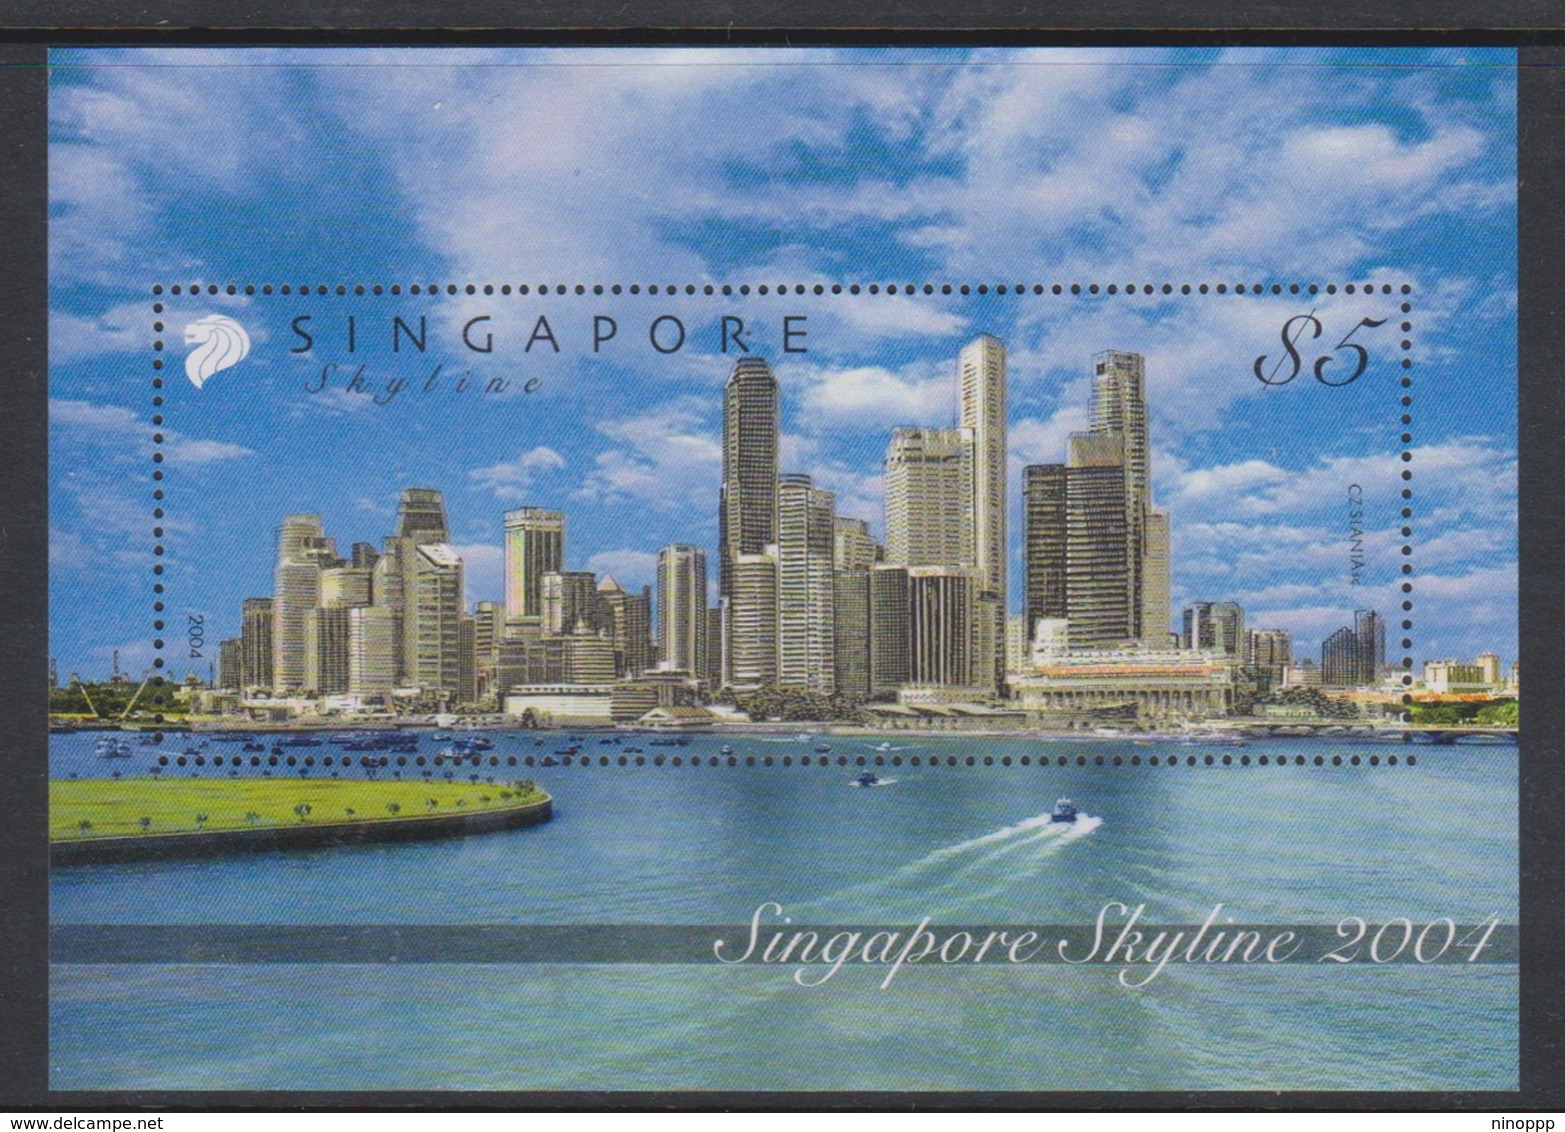 Singapore SO4-4M2 2004 Singapore Skyline, Miniature Sheet Mint Never Hinged - Singapore (1959-...)